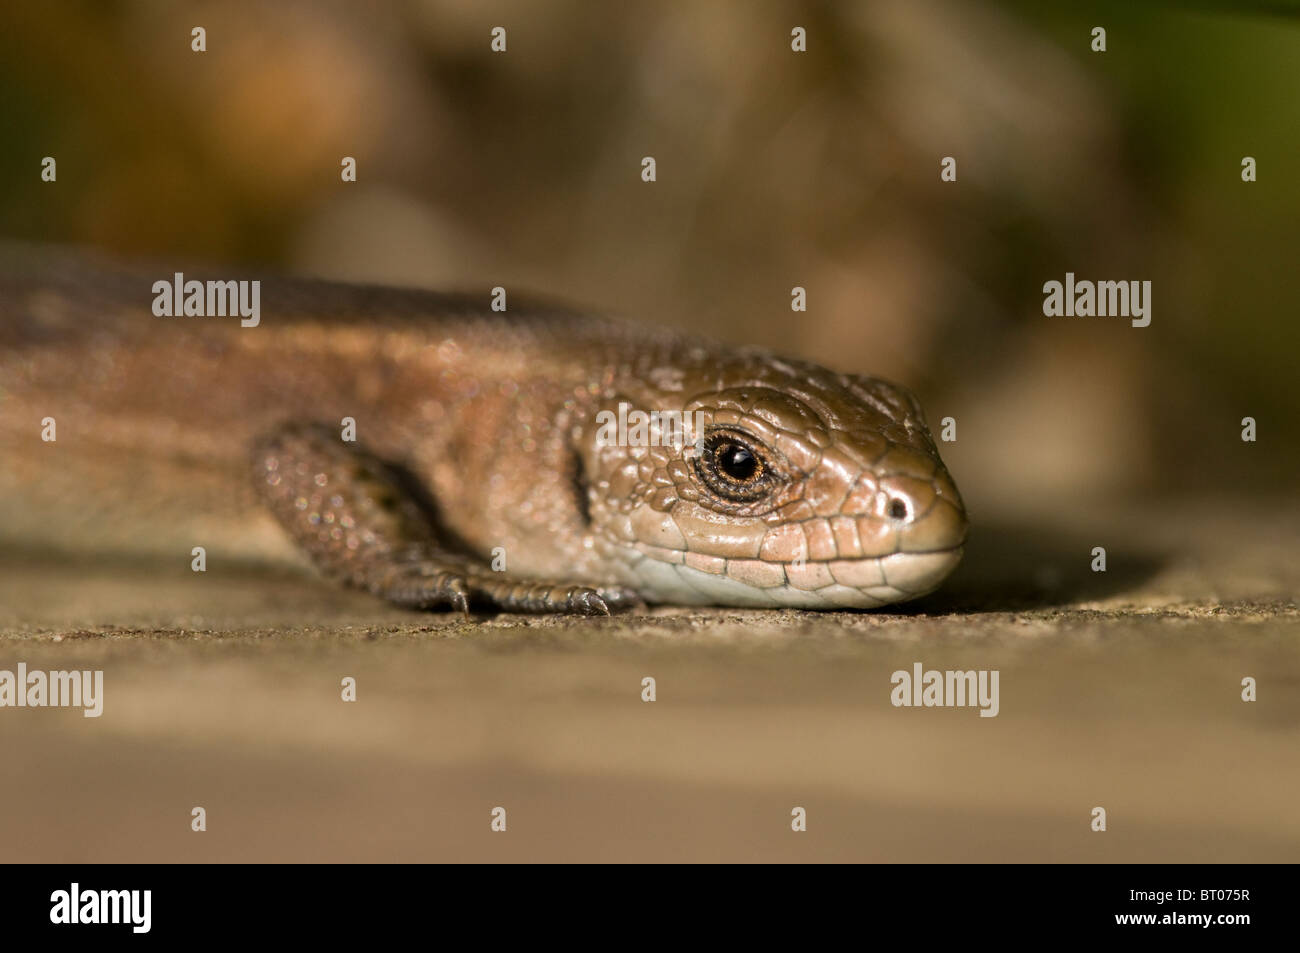 Comuni (vivipara) Lizard, (Lacerta vivipara / Zootoca vivipara), crogiolarsi su legno, Settembre. Foto Stock